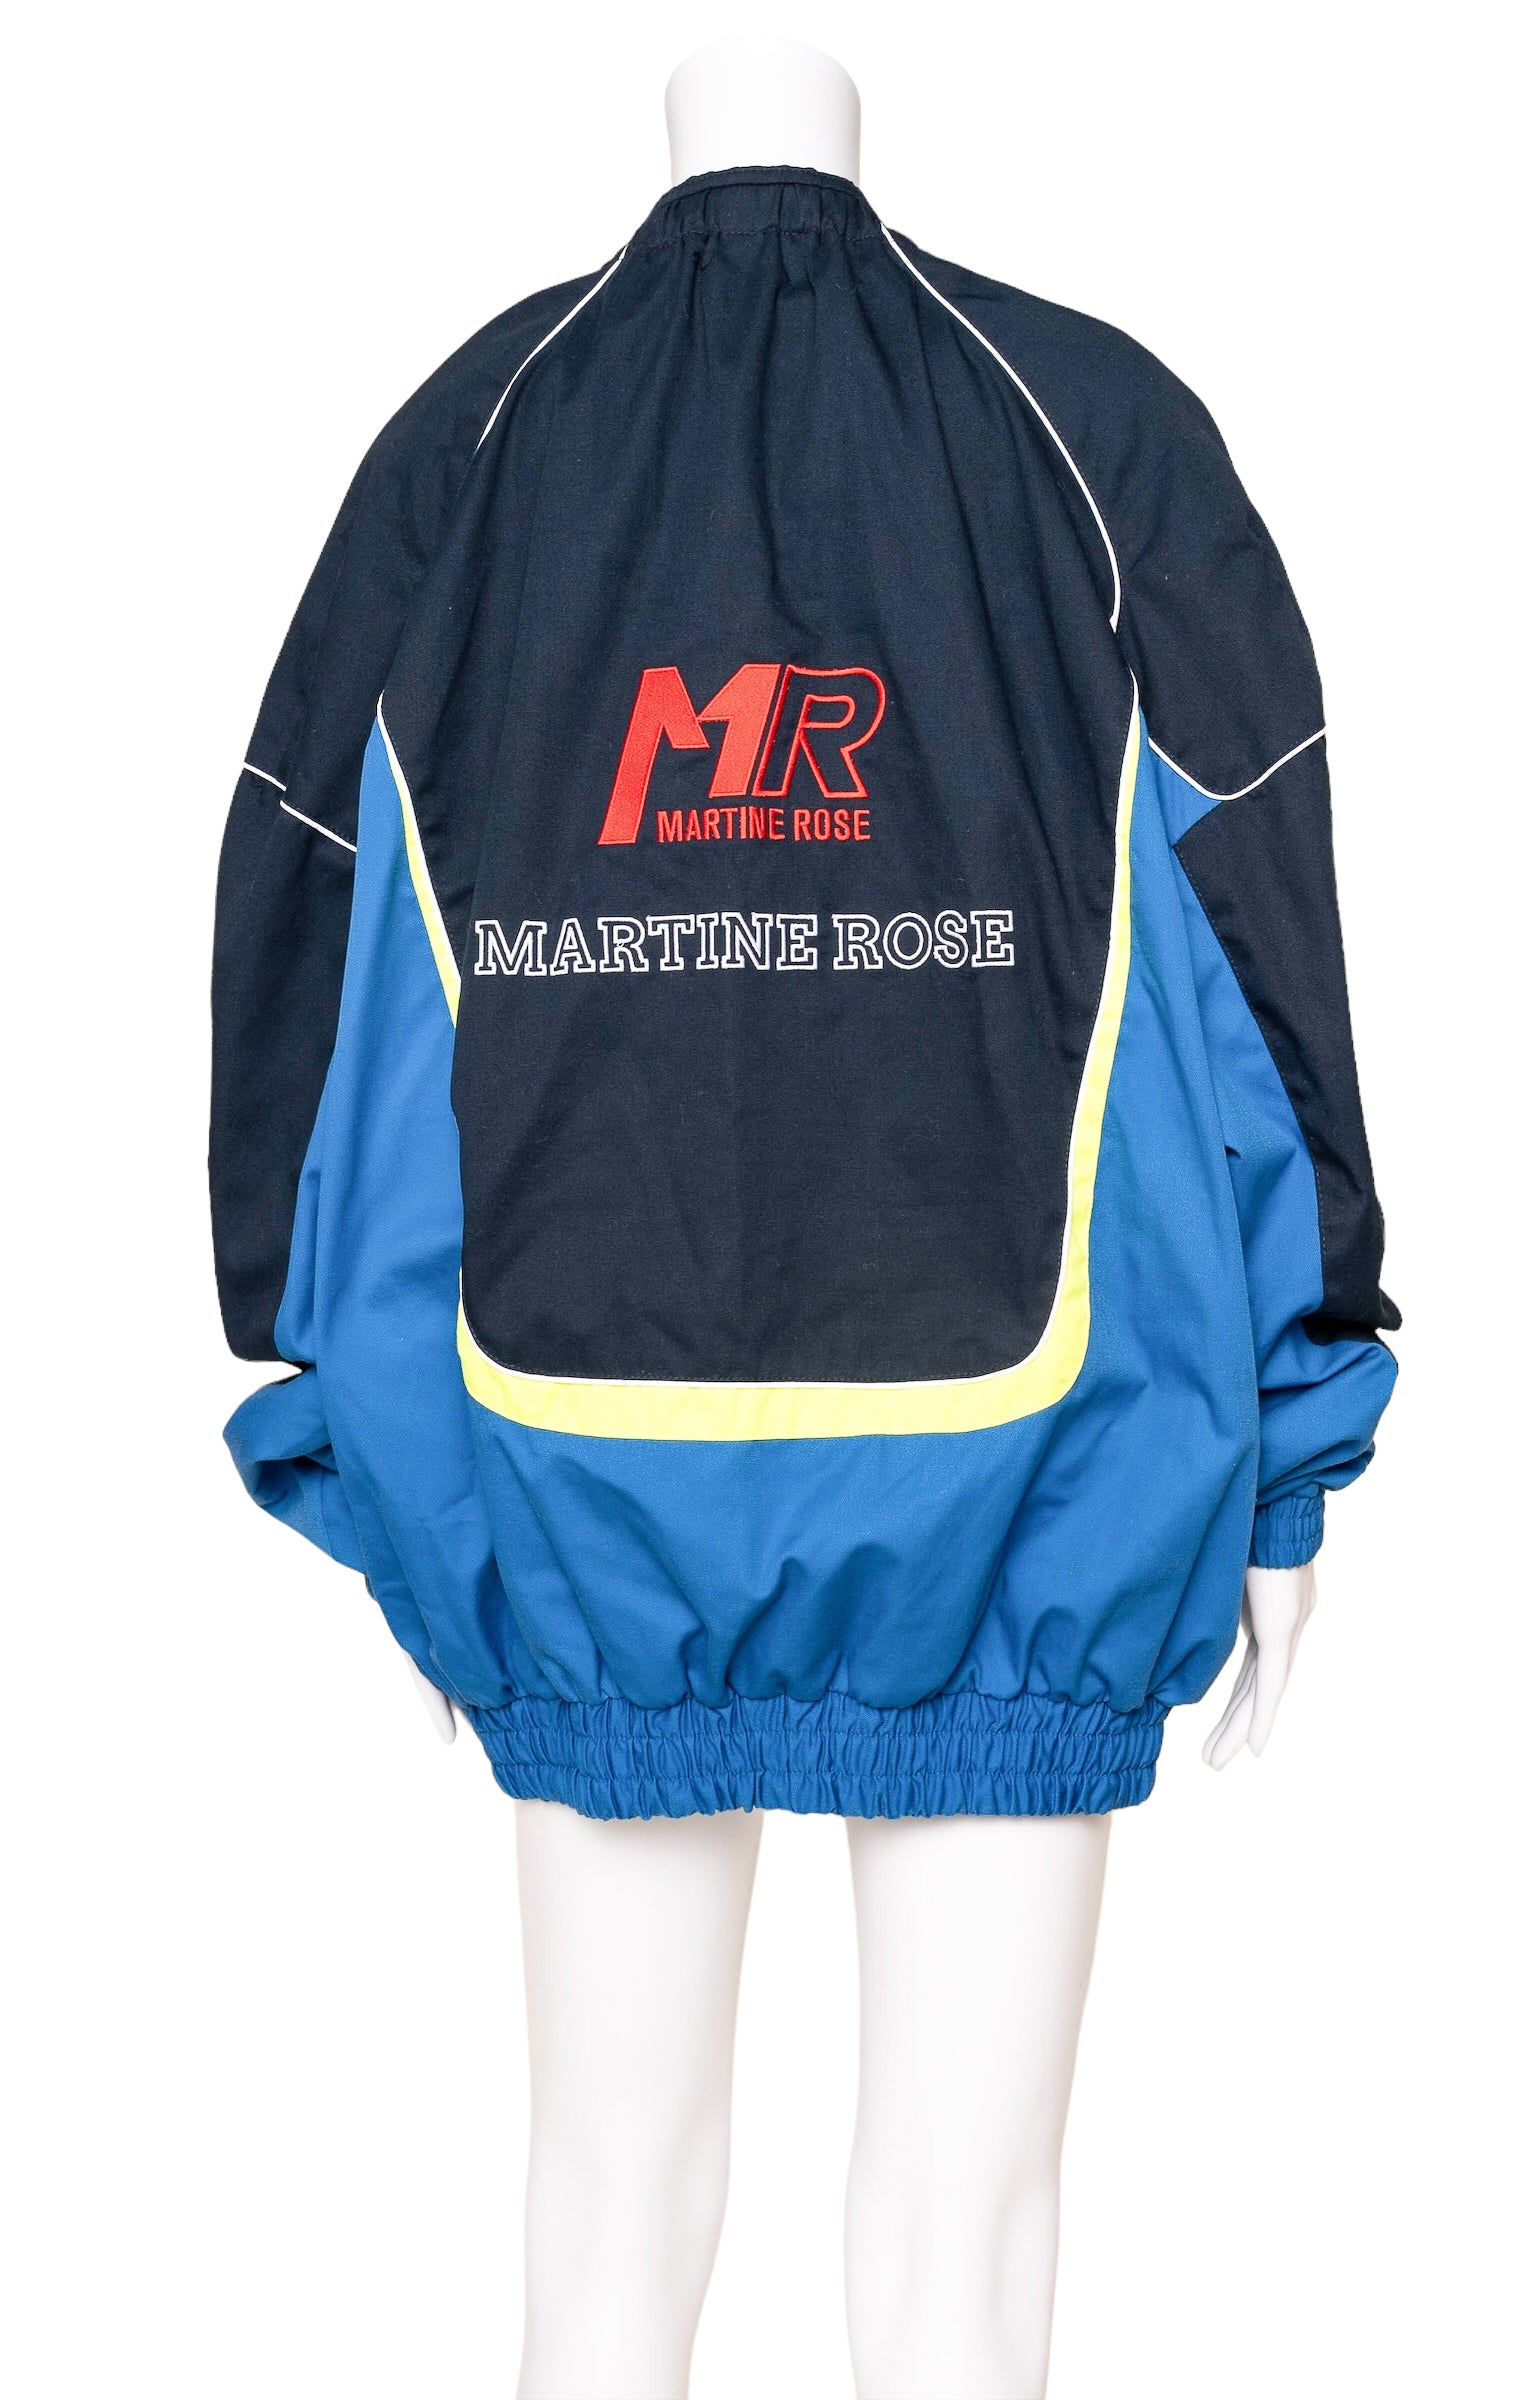 MARTINE ROSE (RARE) Jacket Size: Men's L / Fits like Women's XL-2XL